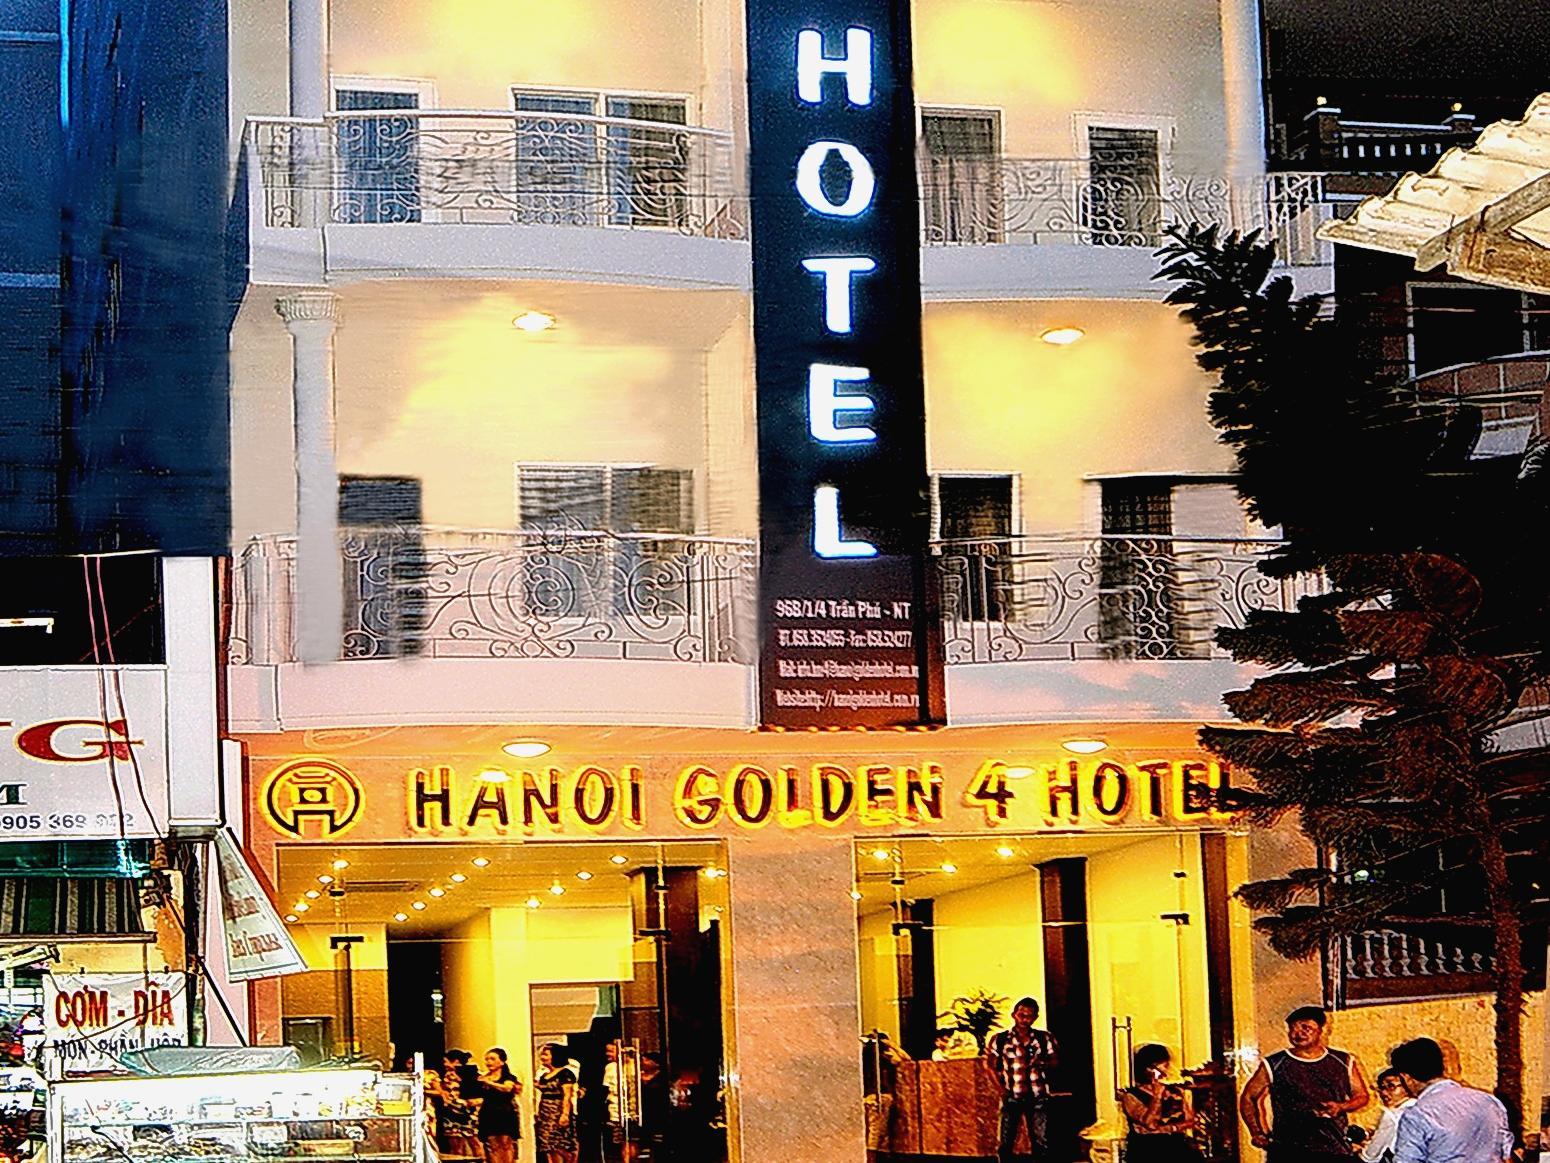 Hanoi Golden 4 Hotel